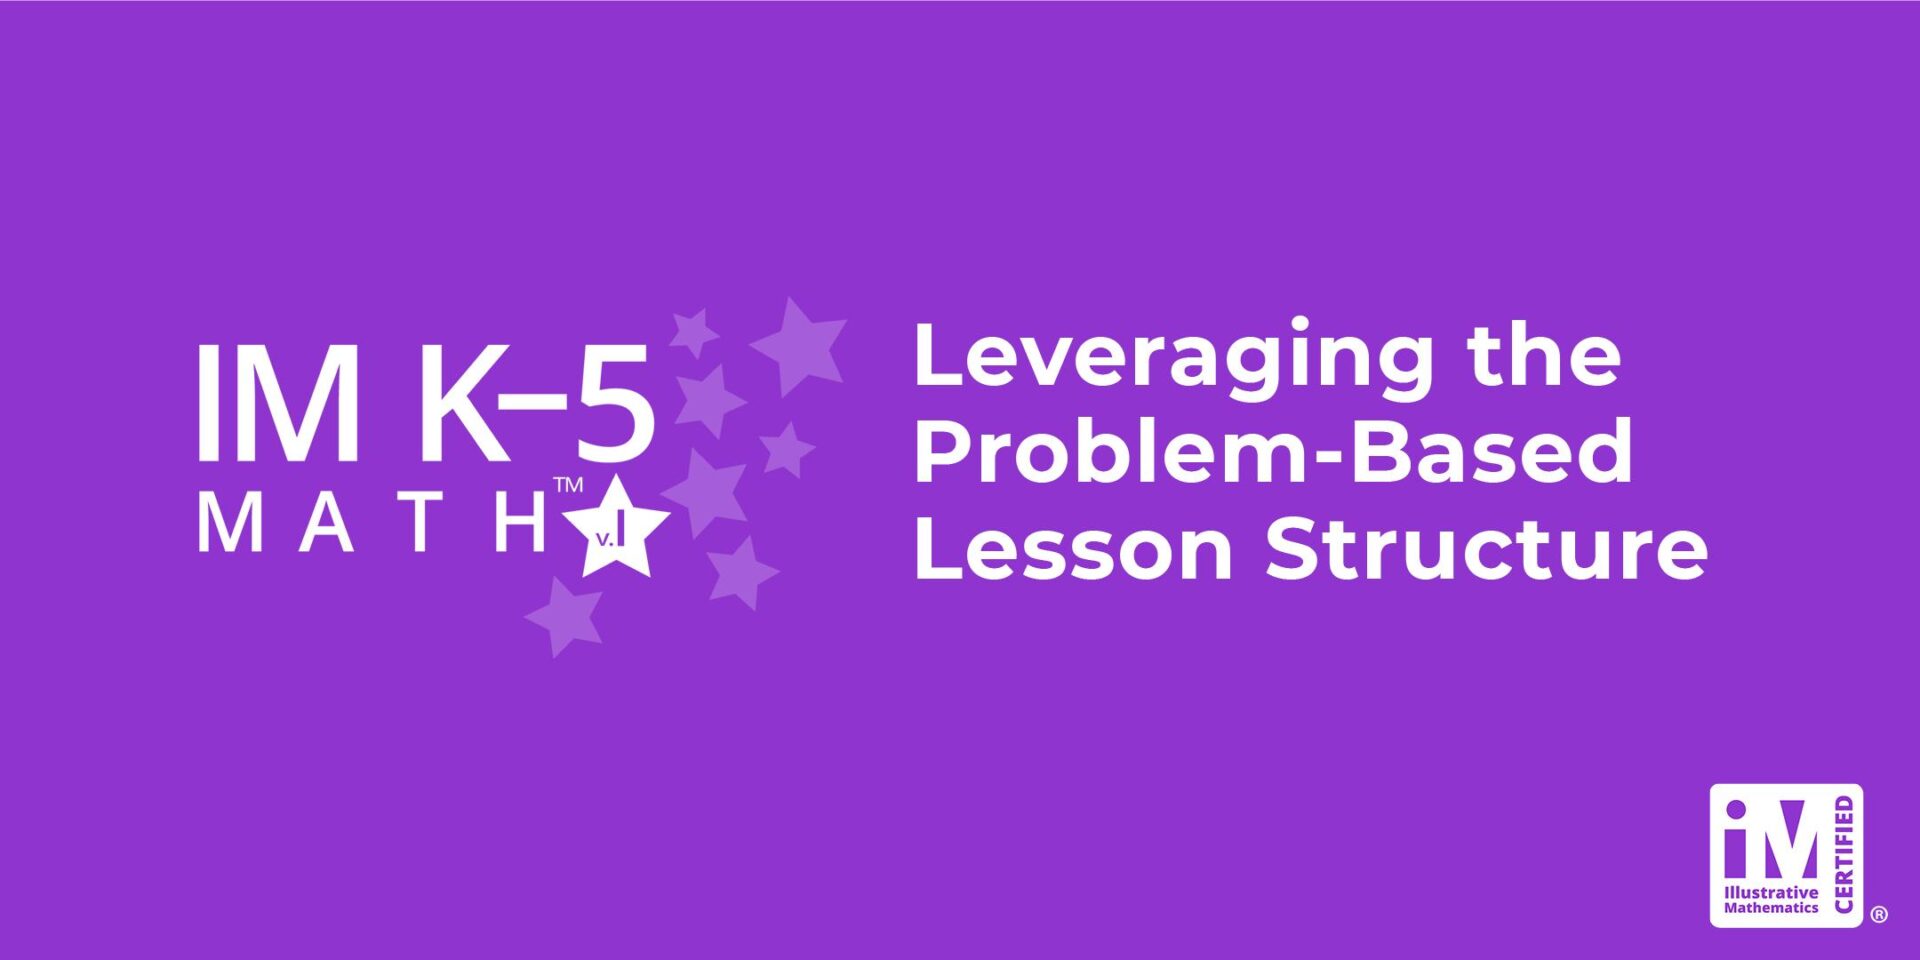 IM K-5 Math: Leveraging the Problem-Based Lesson Structure (Grades 3-5)